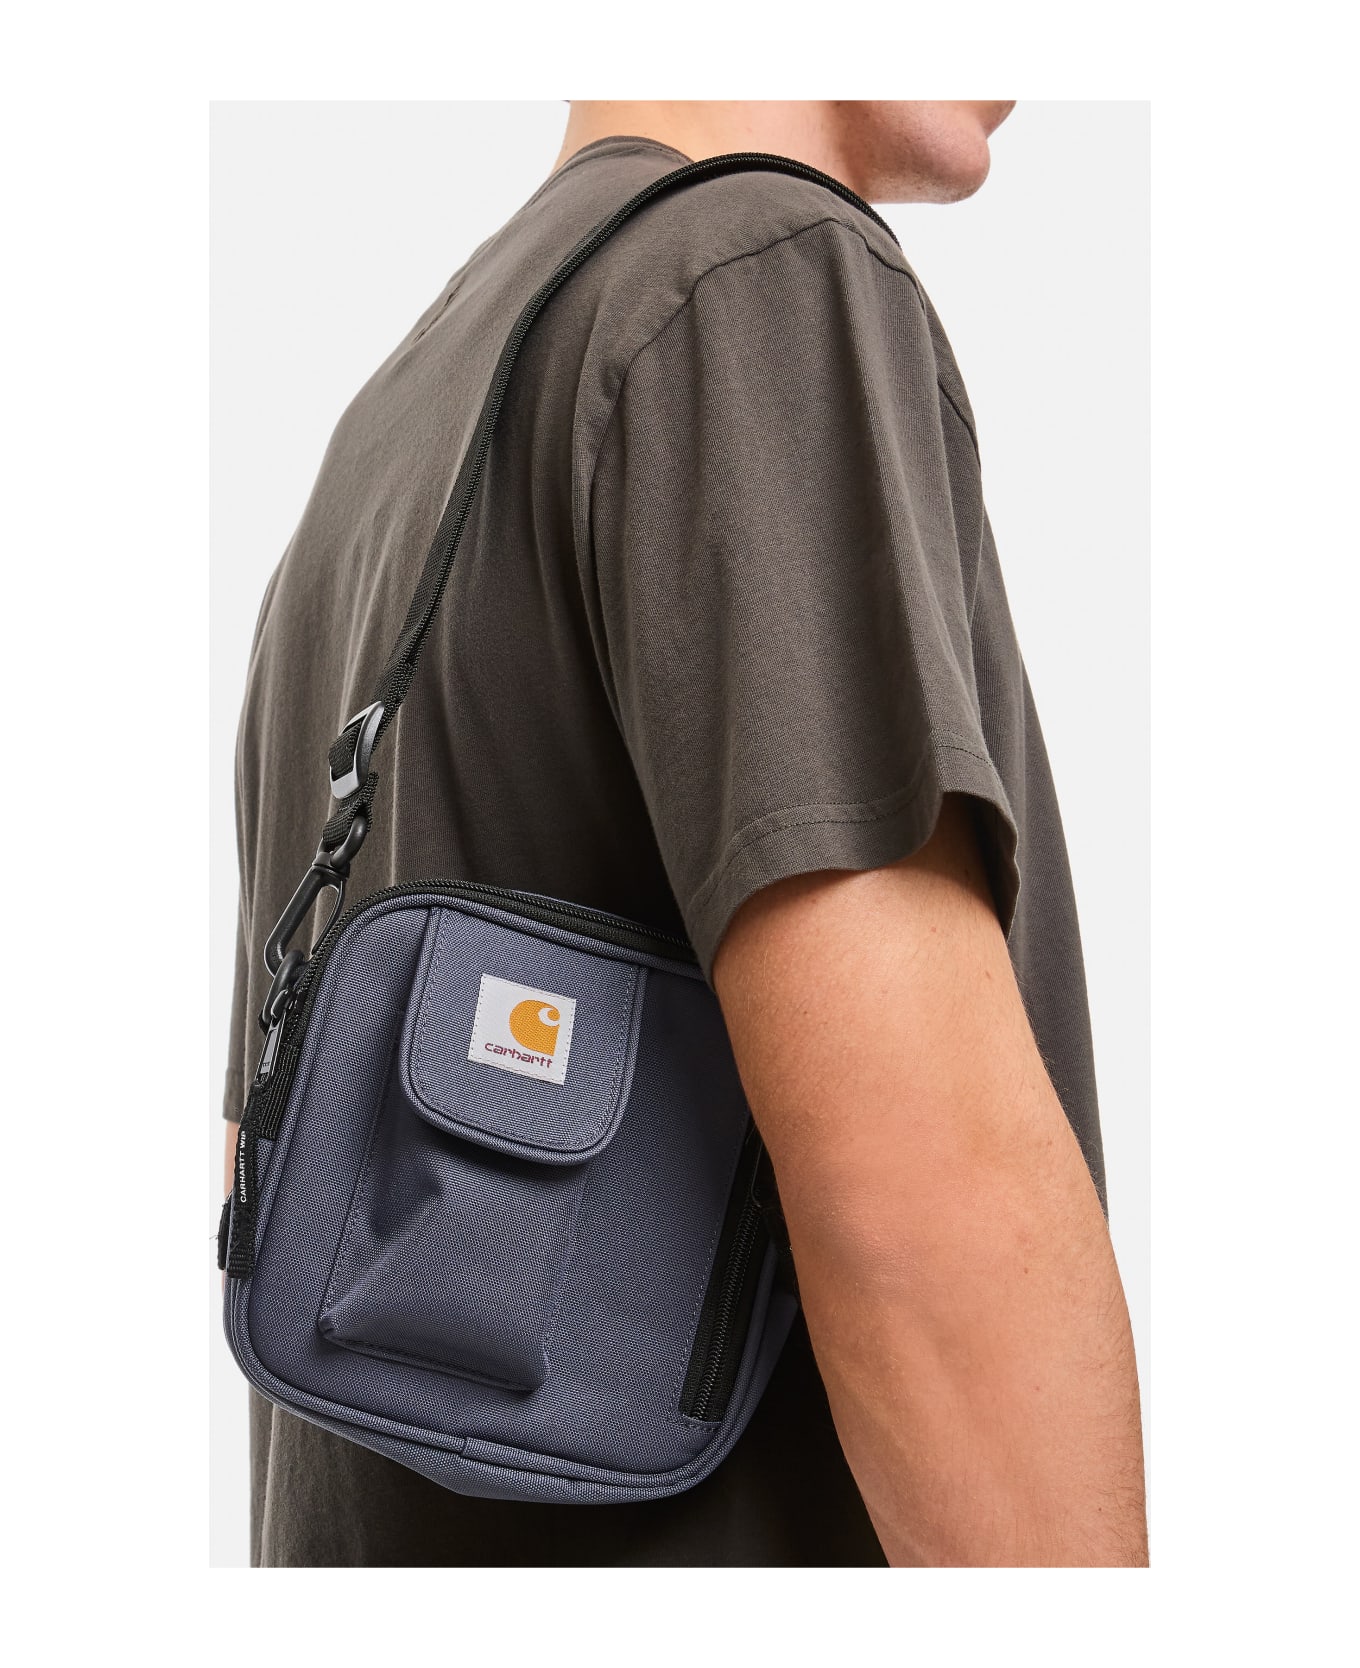 Carhartt Essentials Small Bag - BLUE ショルダーバッグ